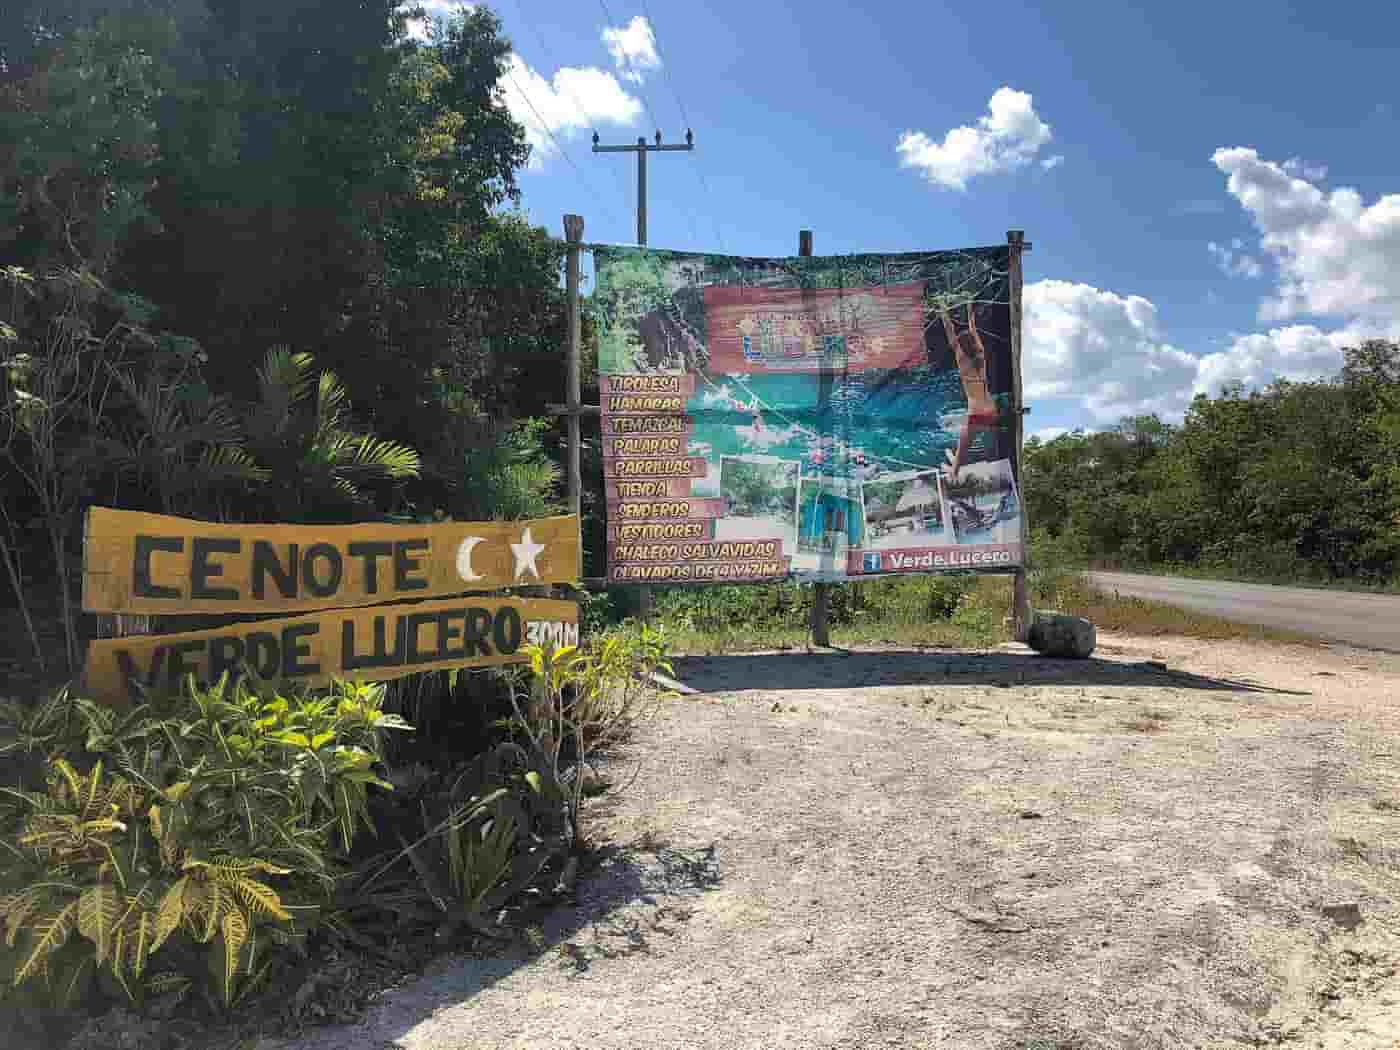 Straßenschild Cenote Verde Lucero